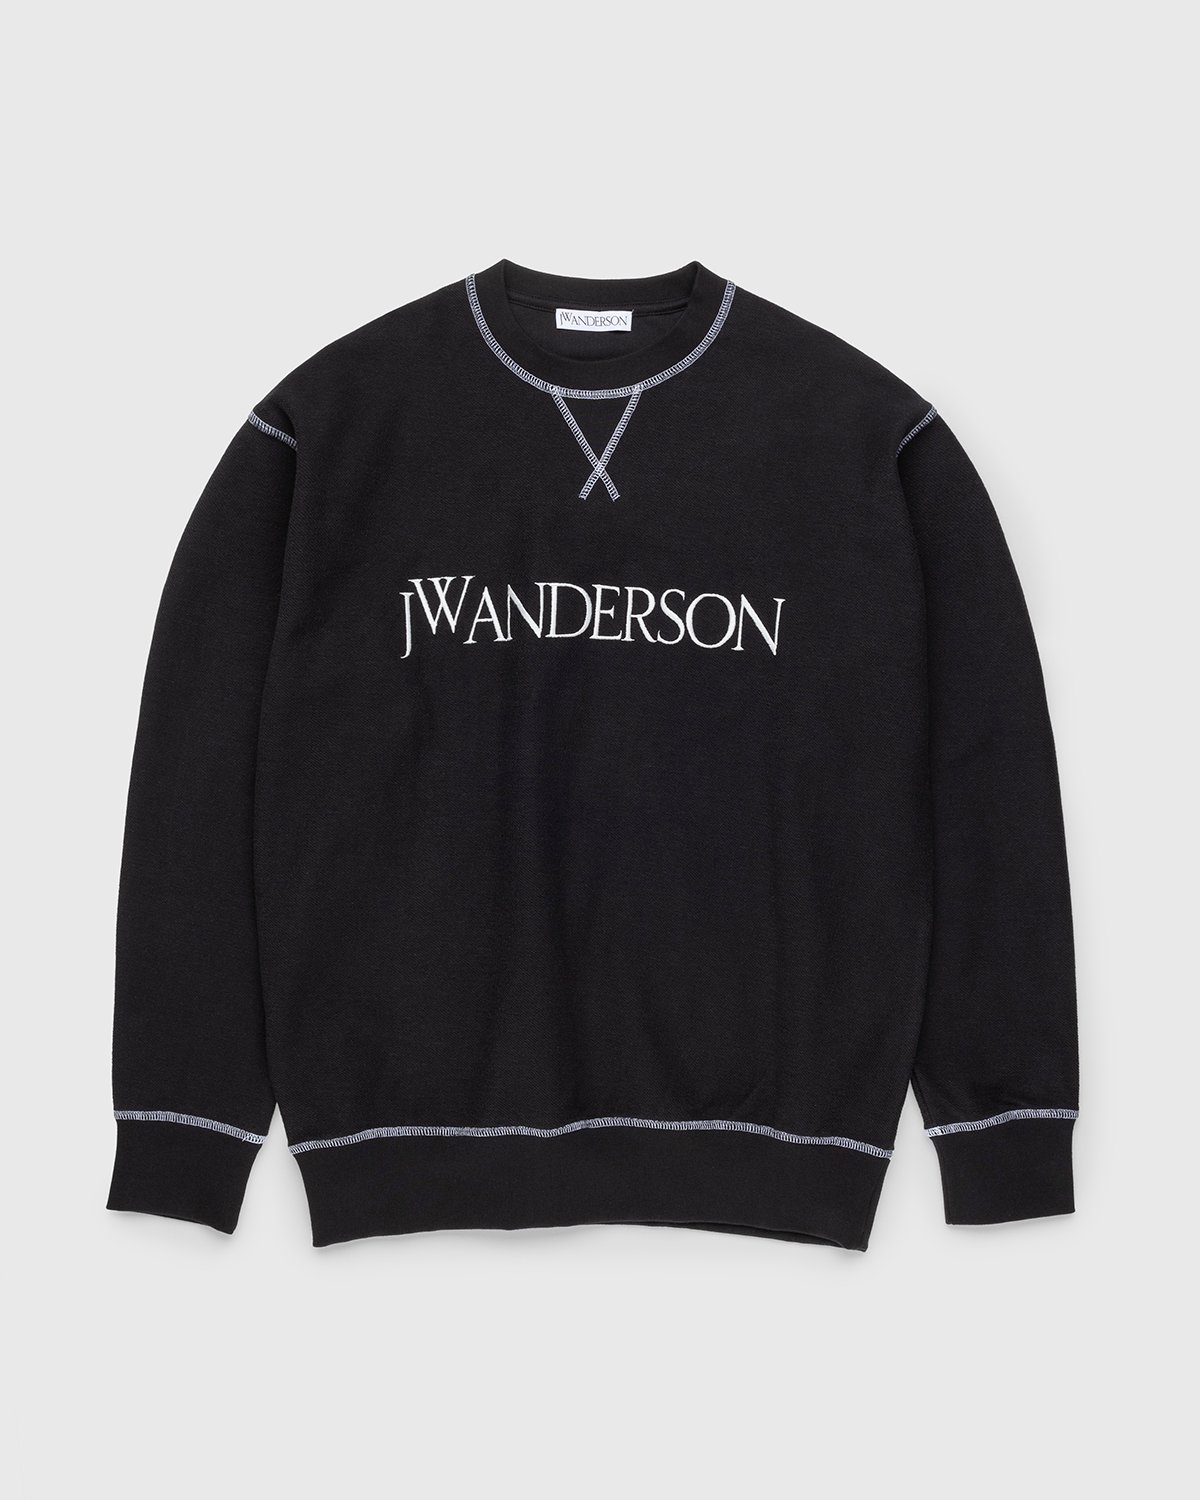 J.W. Anderson - Inside Out Contrast Sweatshirt Black - Clothing - Black - Image 1